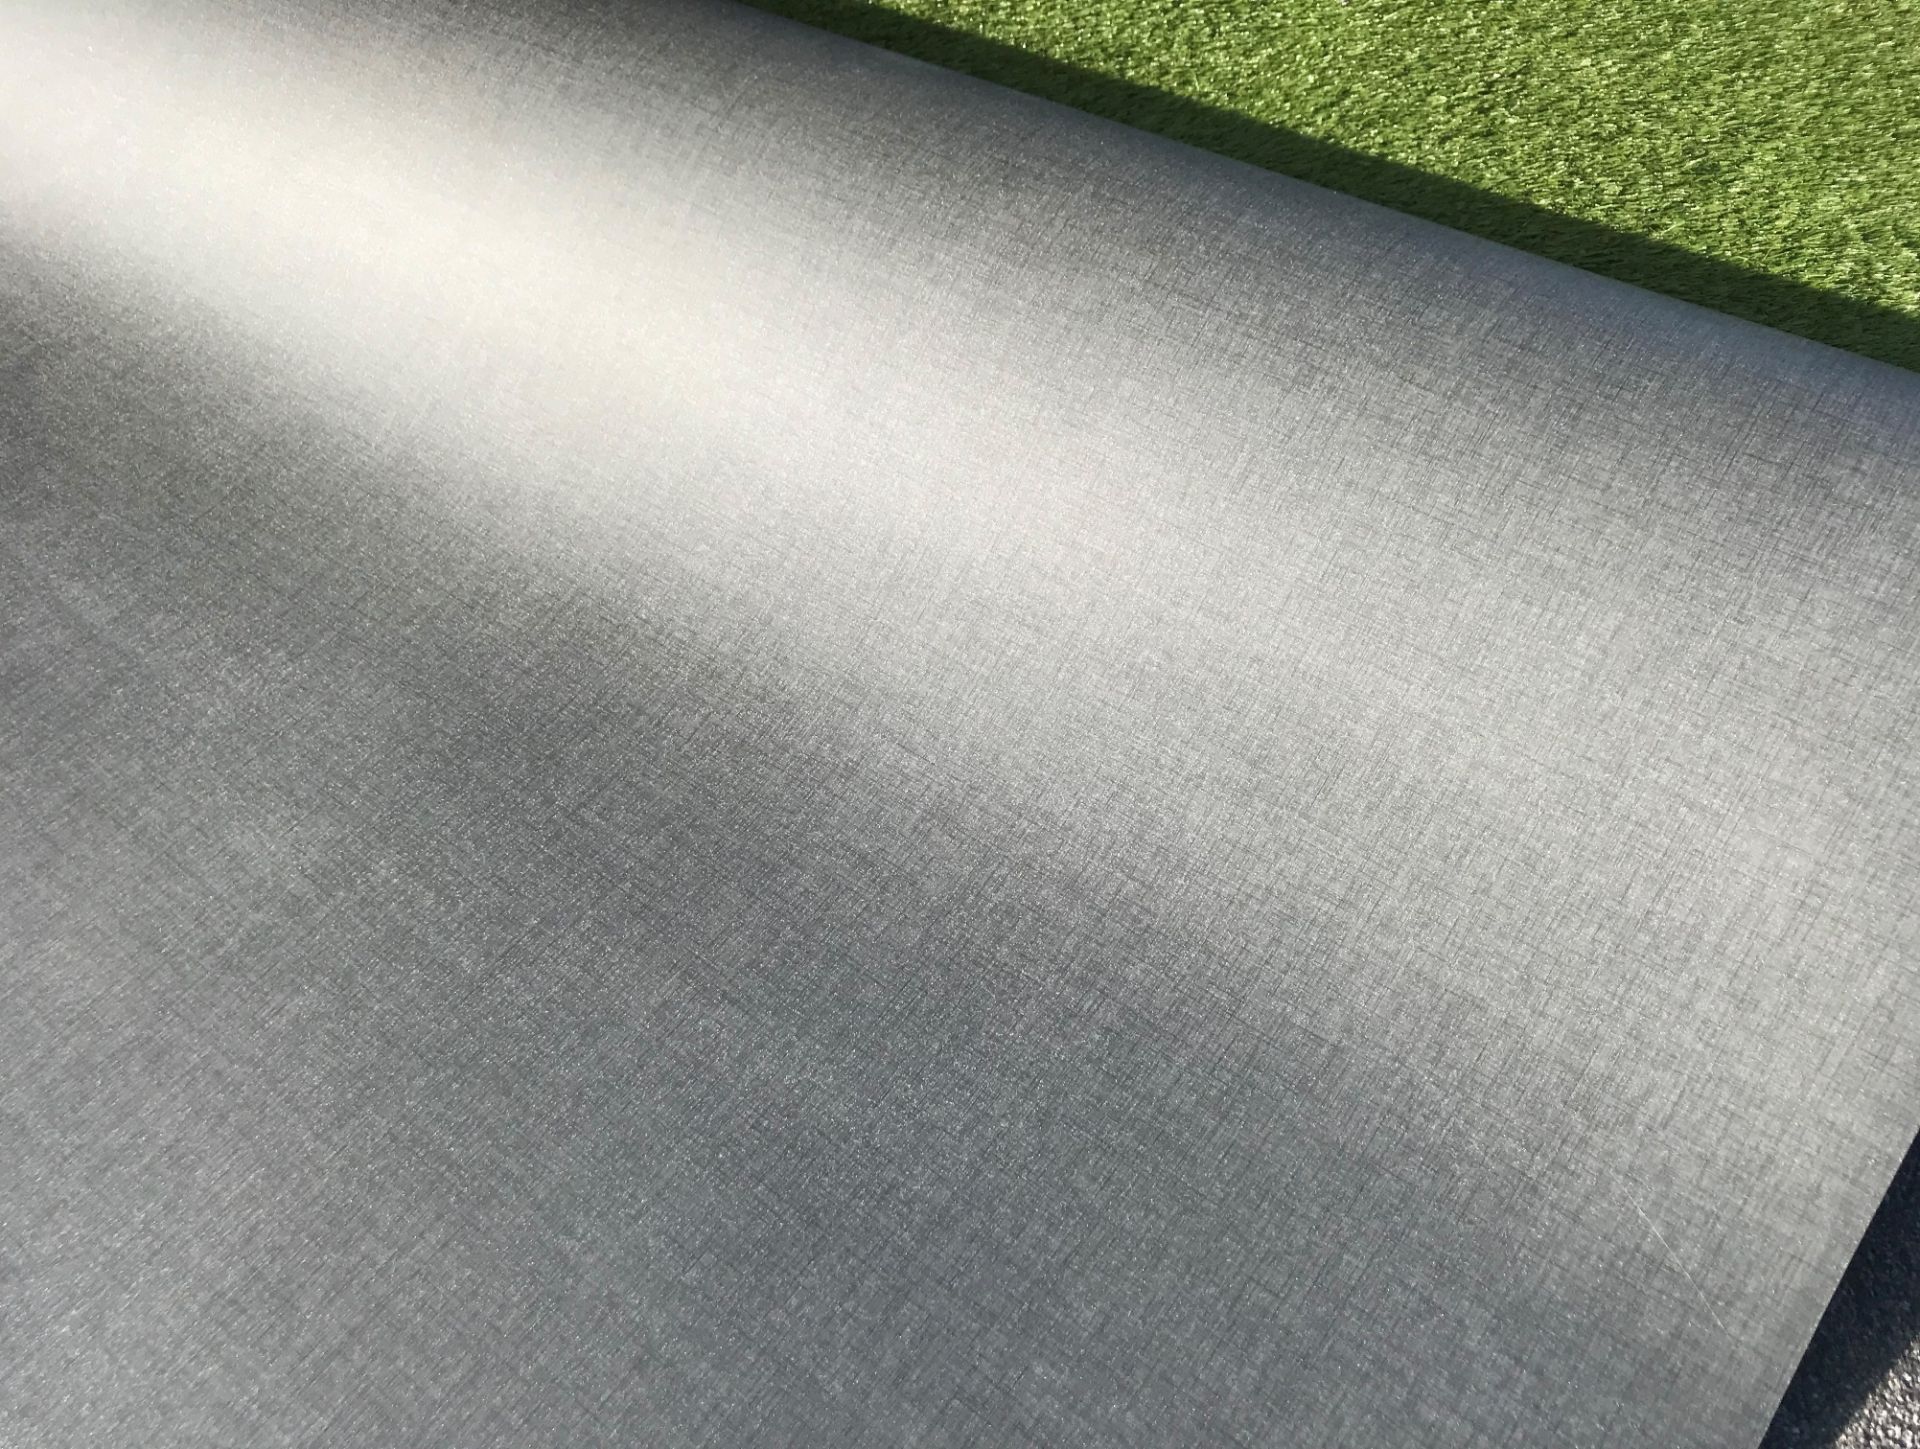 1 x GERFLOR Tarkett Commercial Grade Safety Flooring - Colour Charcoal- 20X2 Meter Roll - Ref: